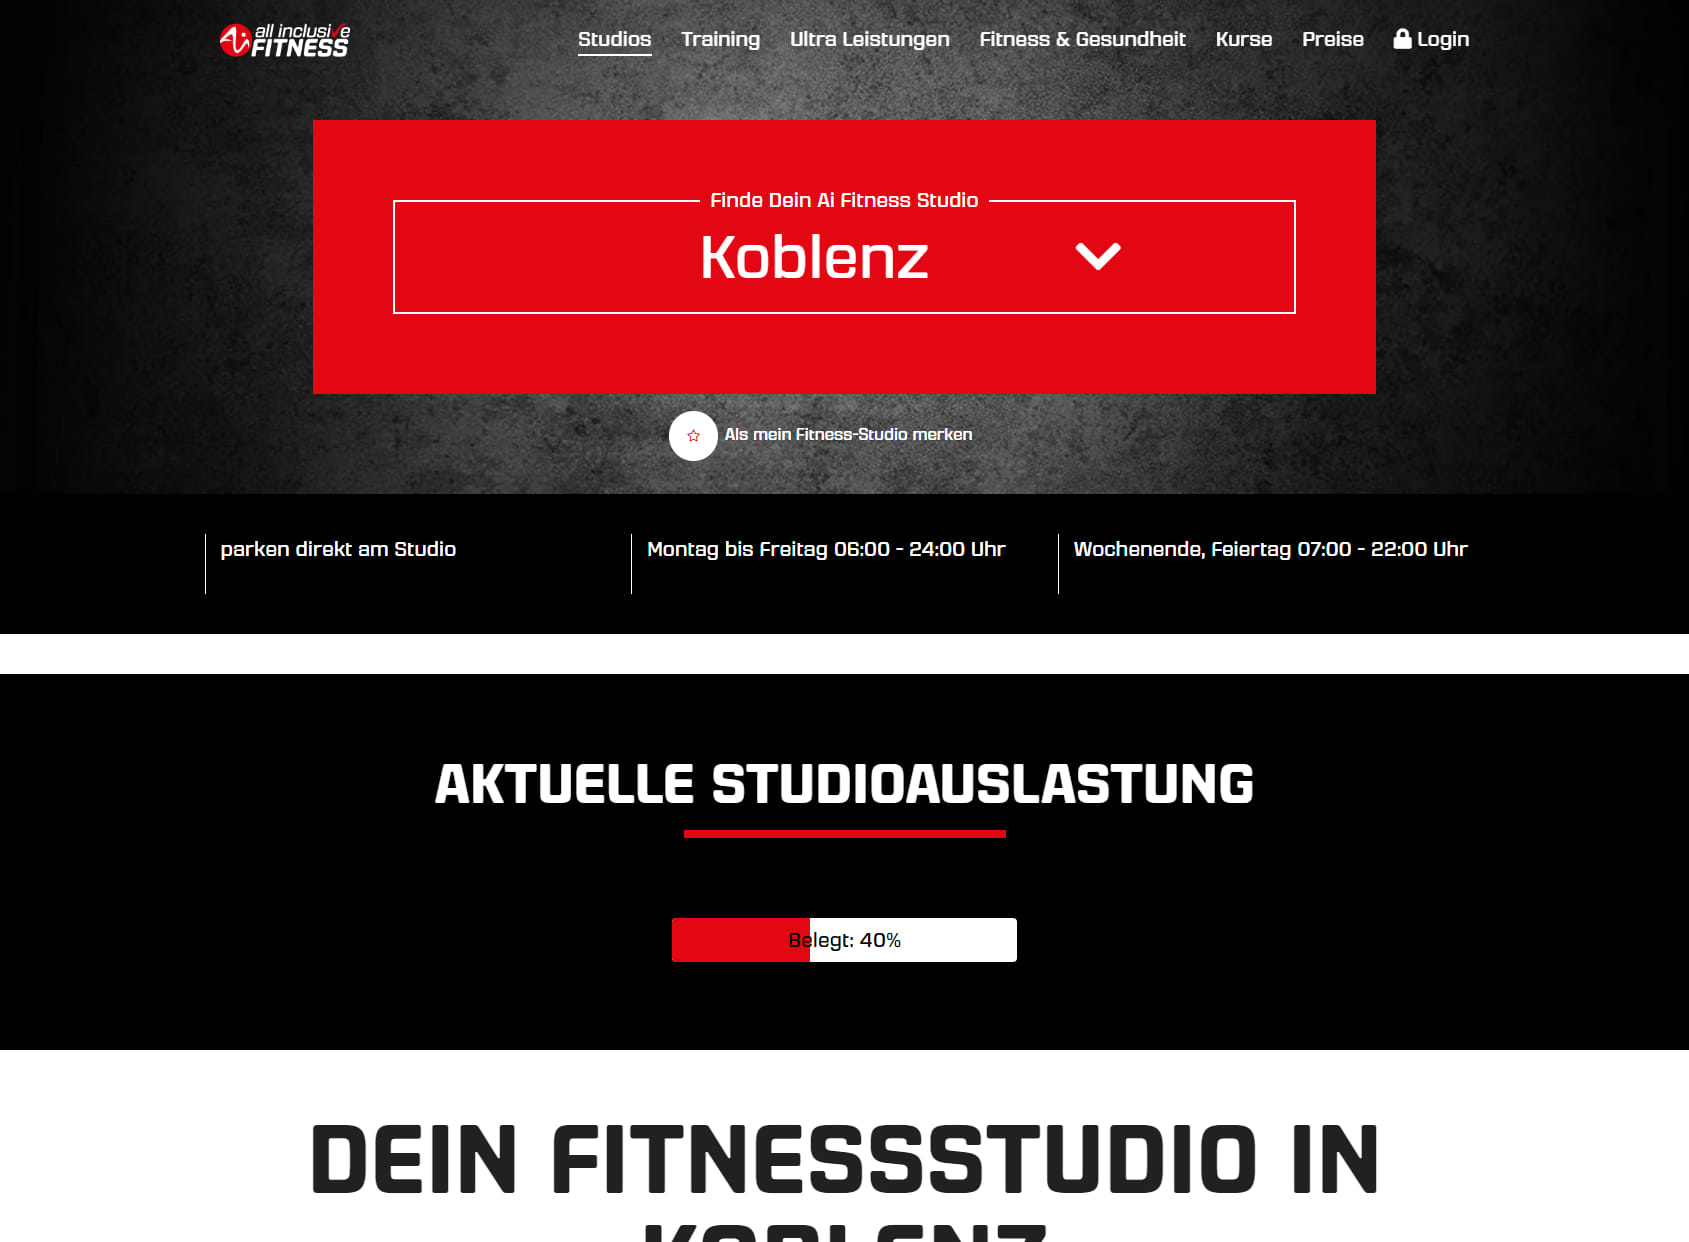 Five Star Fitness Koblenz GmbH